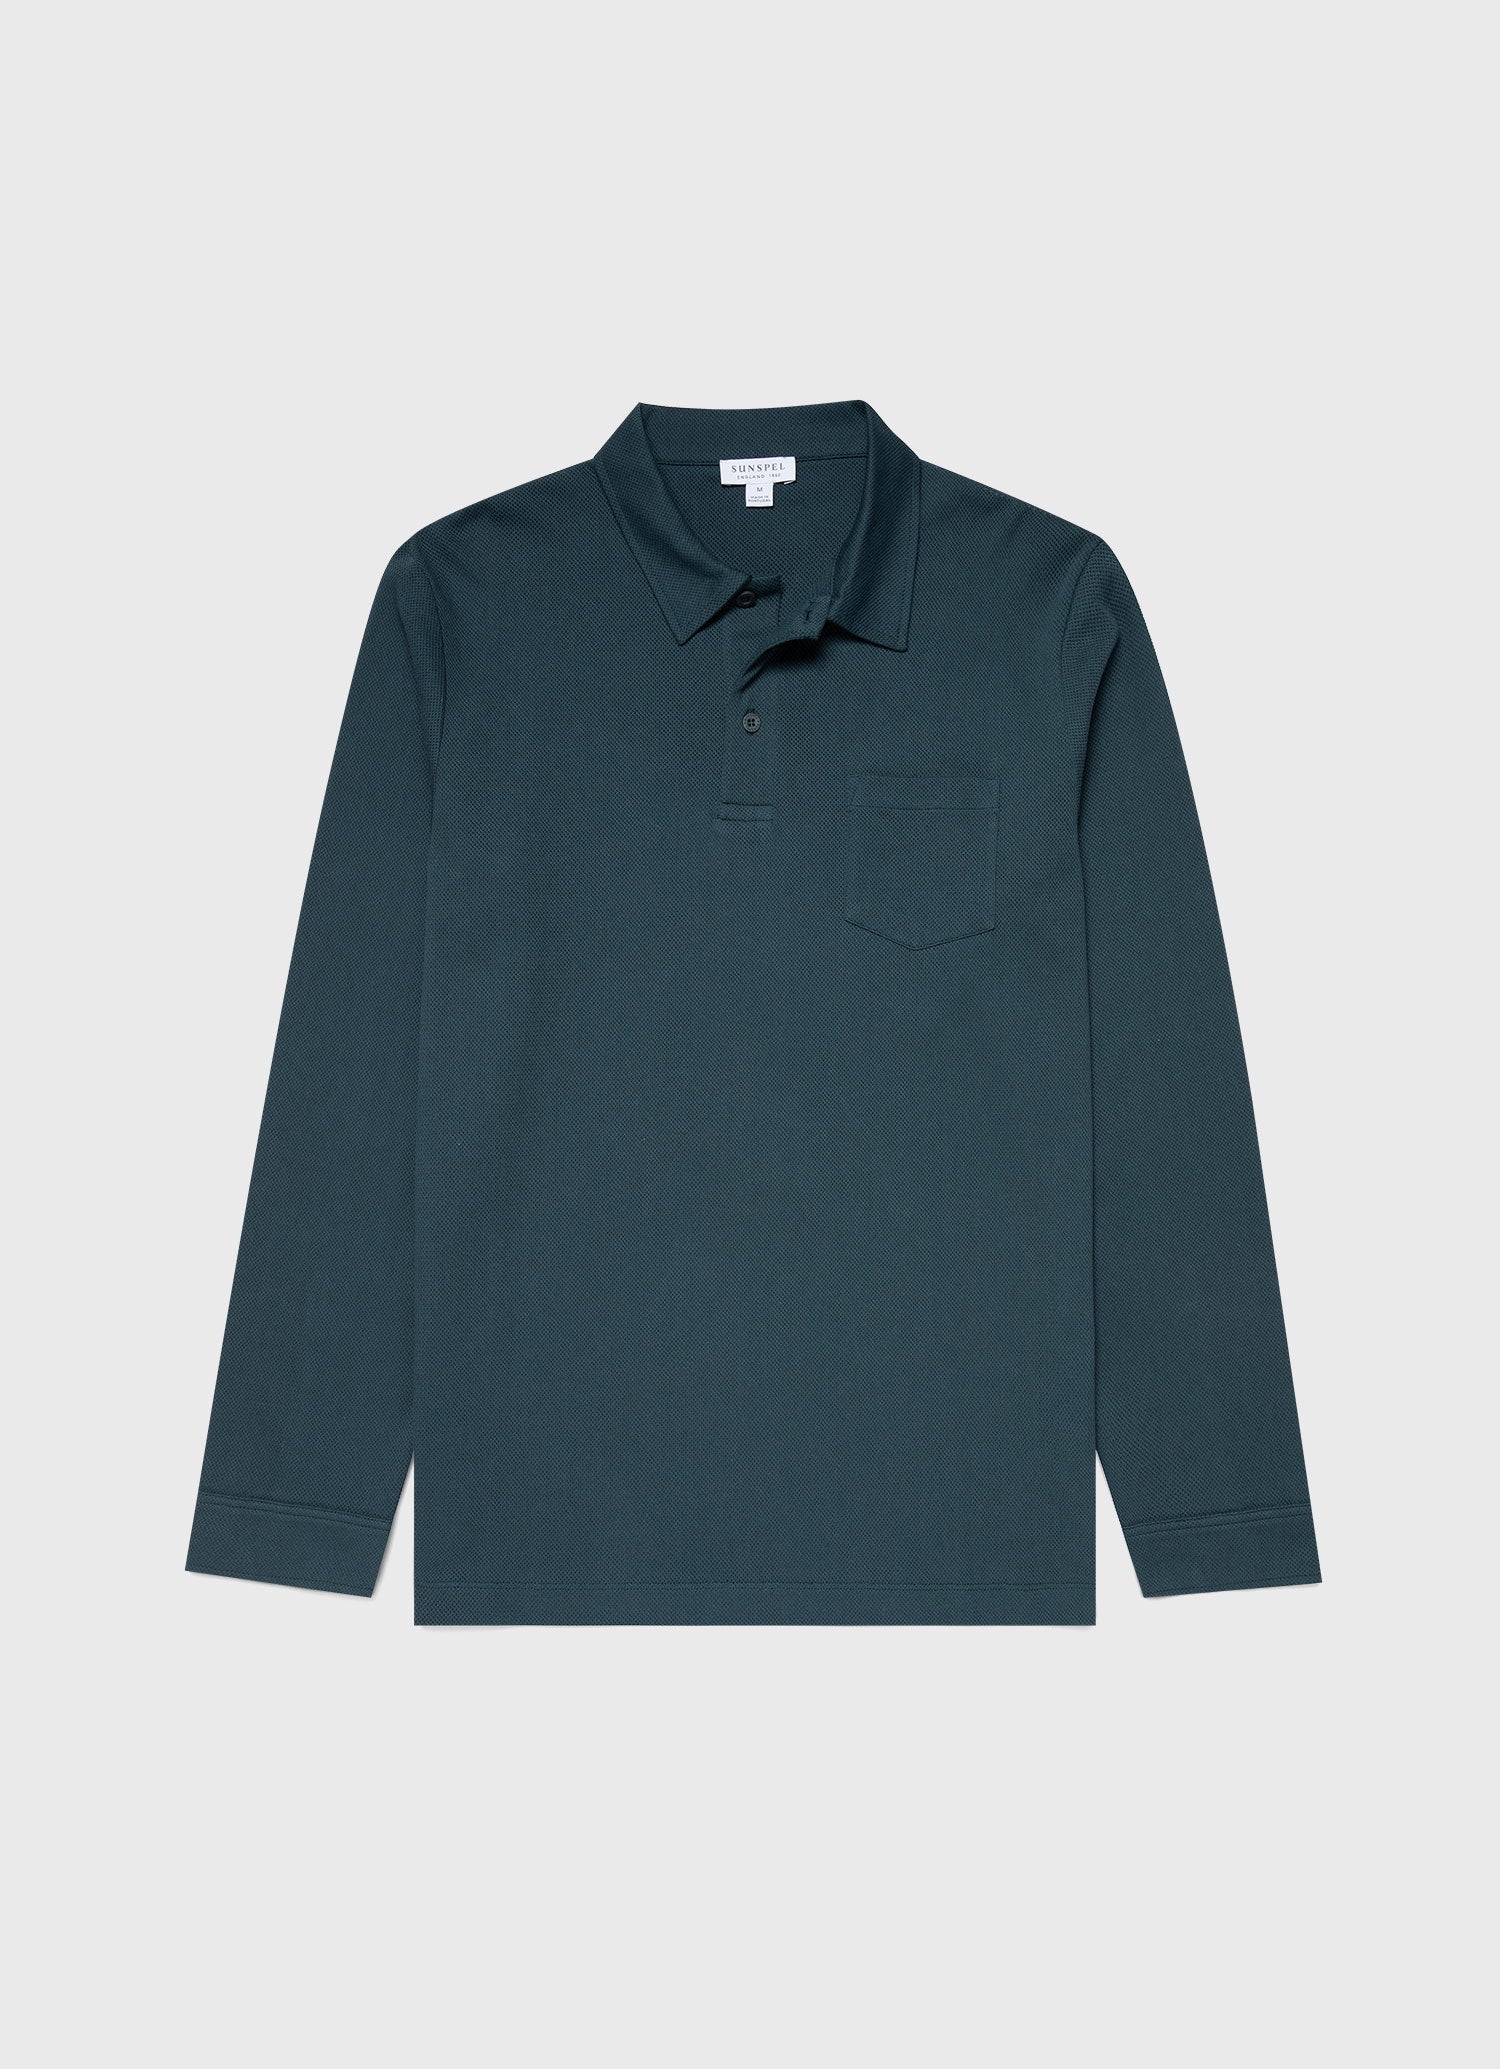 Men's Riviera Long Sleeve Polo Shirt in Peacock